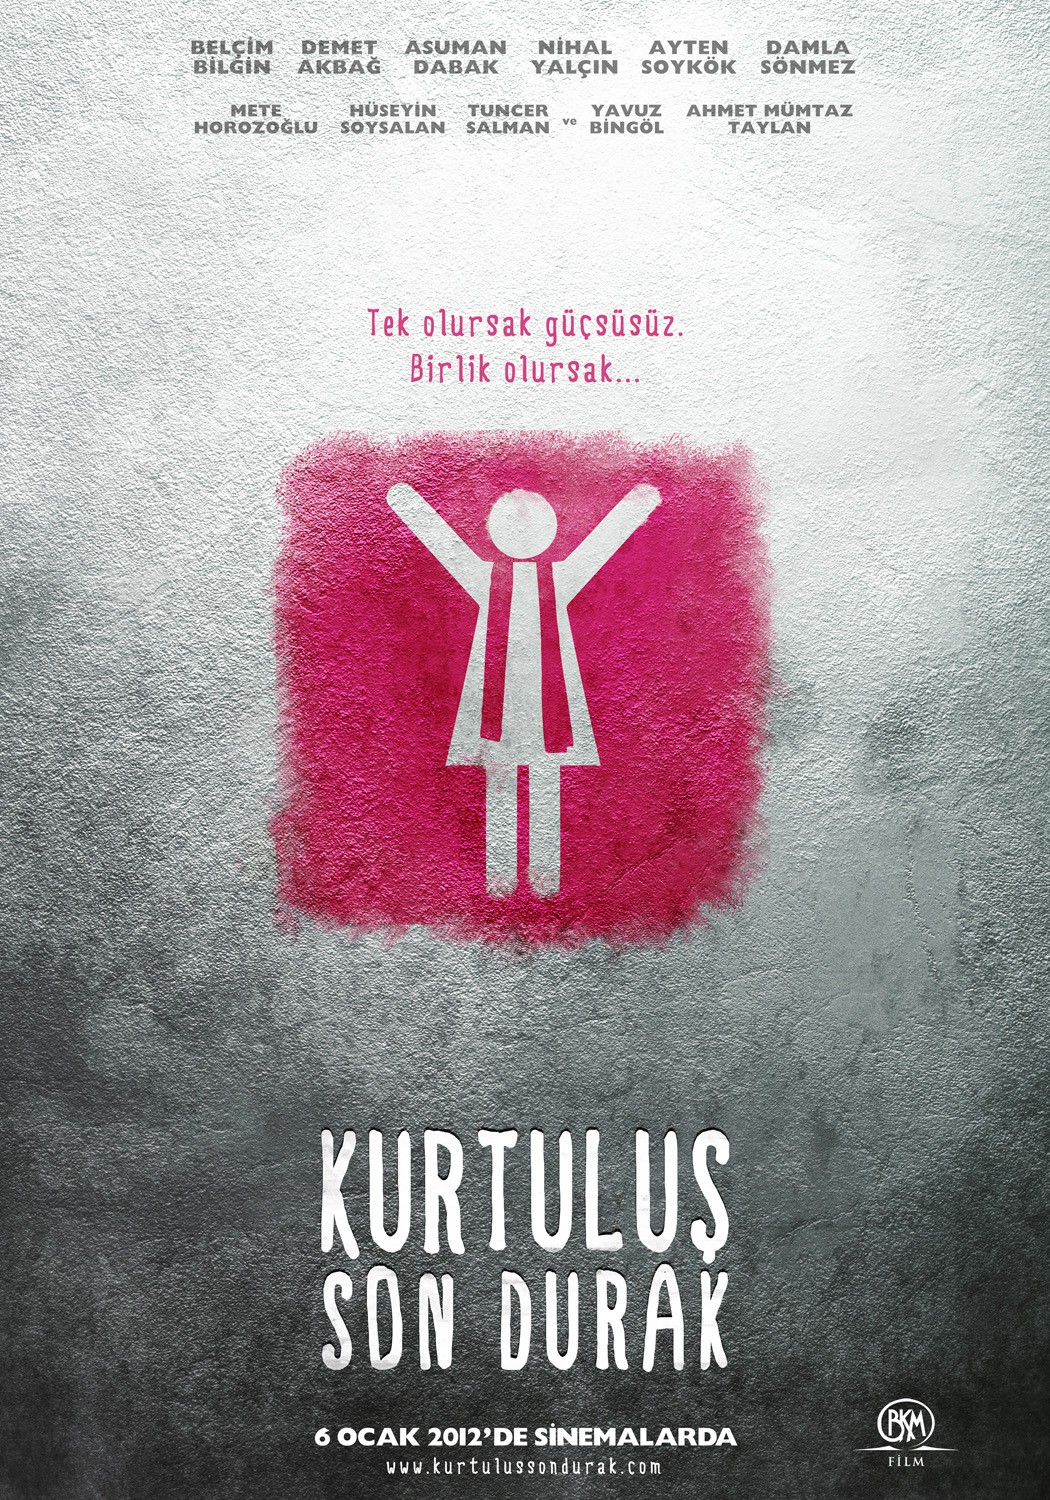 Extra Large Movie Poster Image for Kurtuluş Son Durak (#2 of 4)